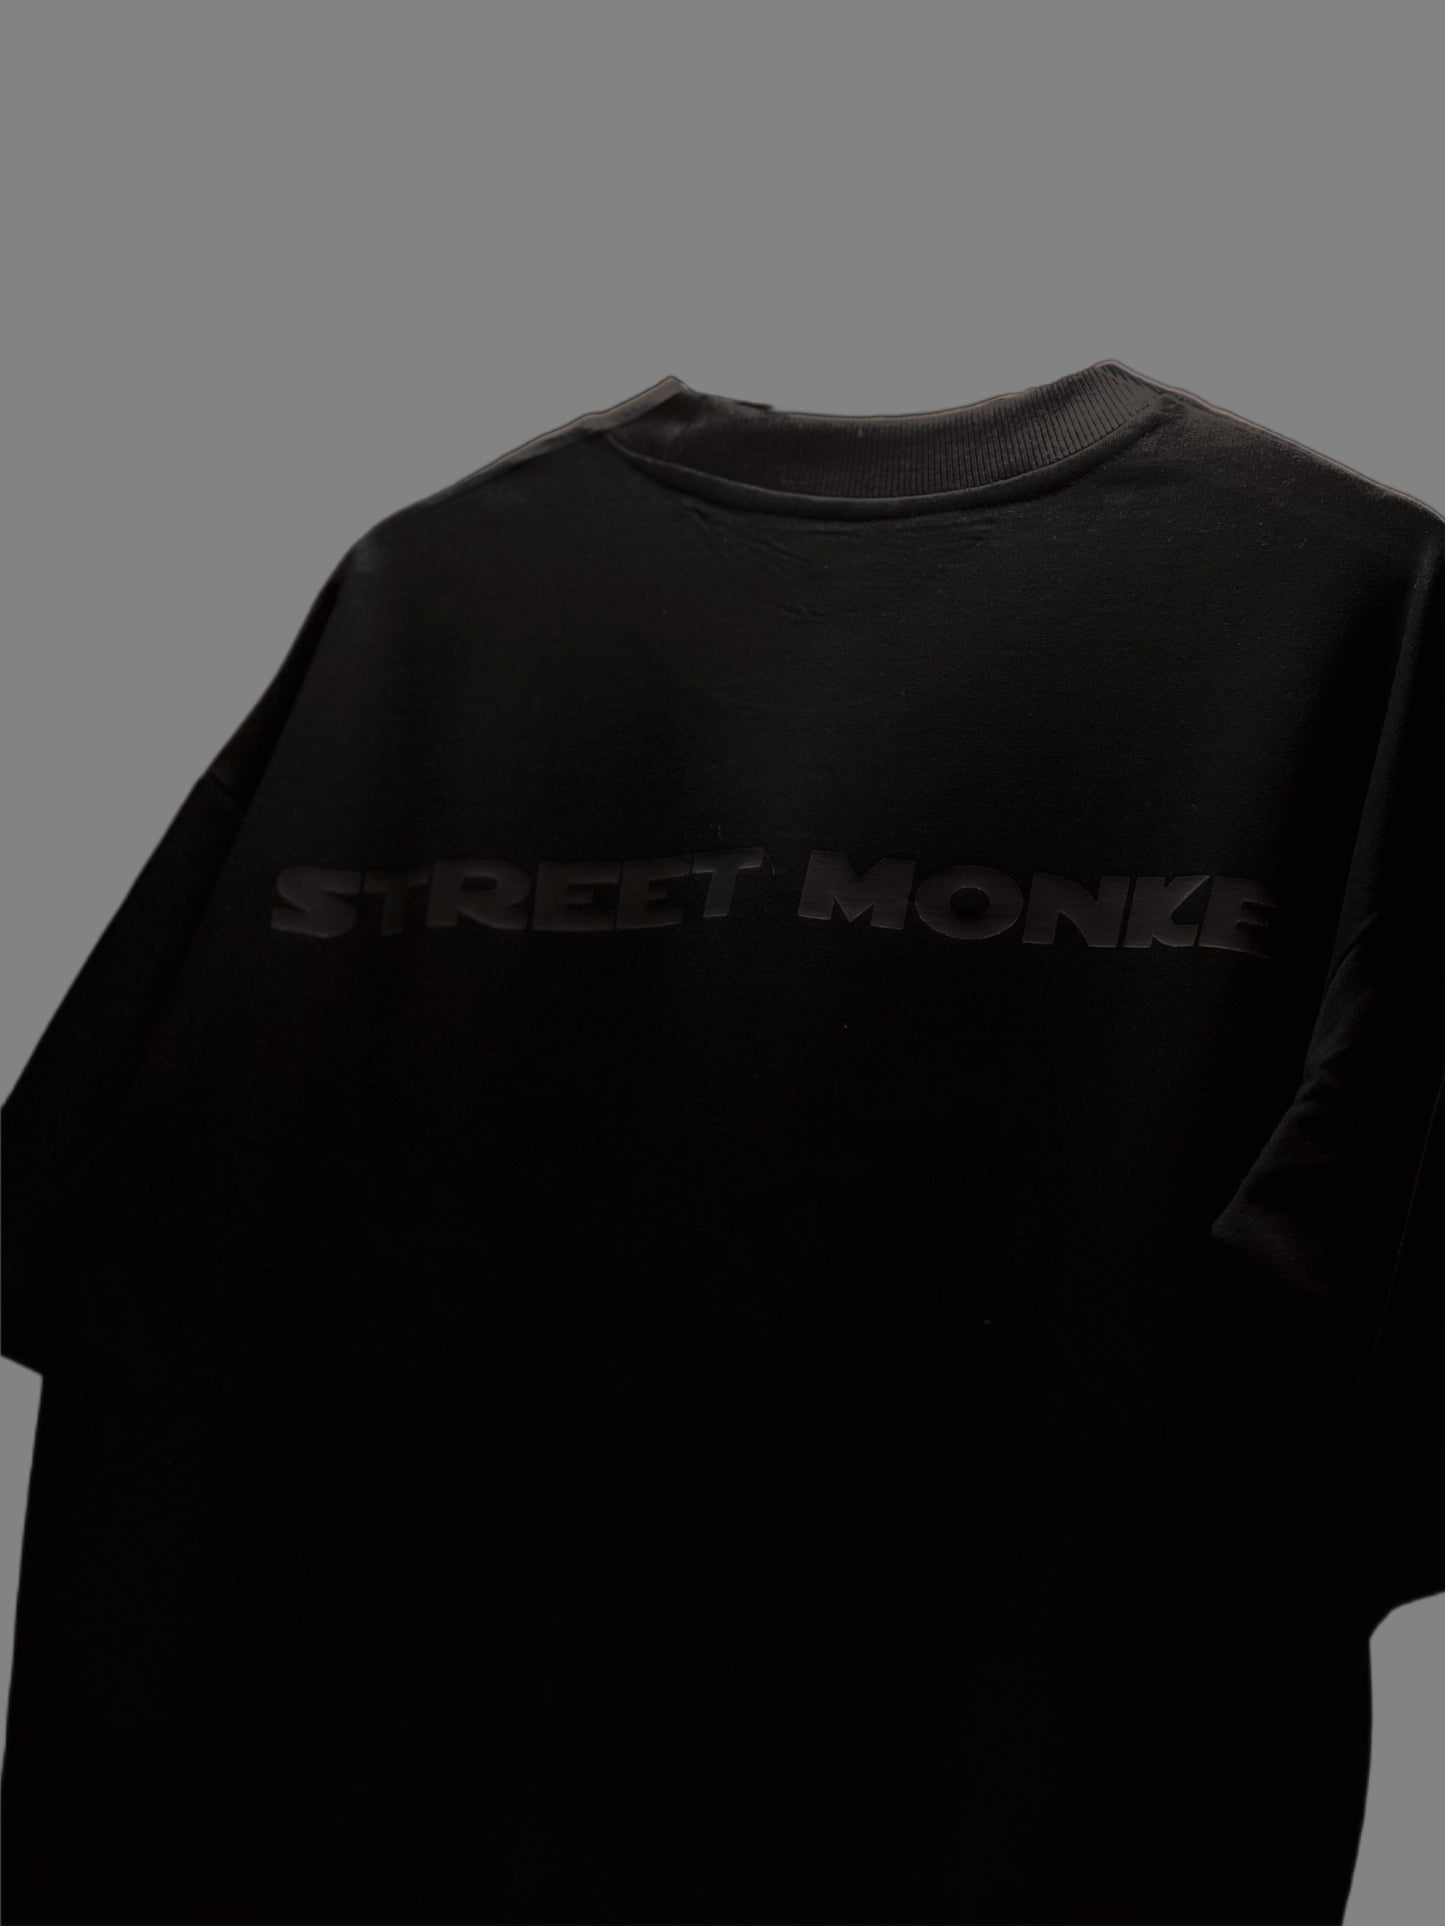 STREET MONKEY SIGNATURE T-SHIRT